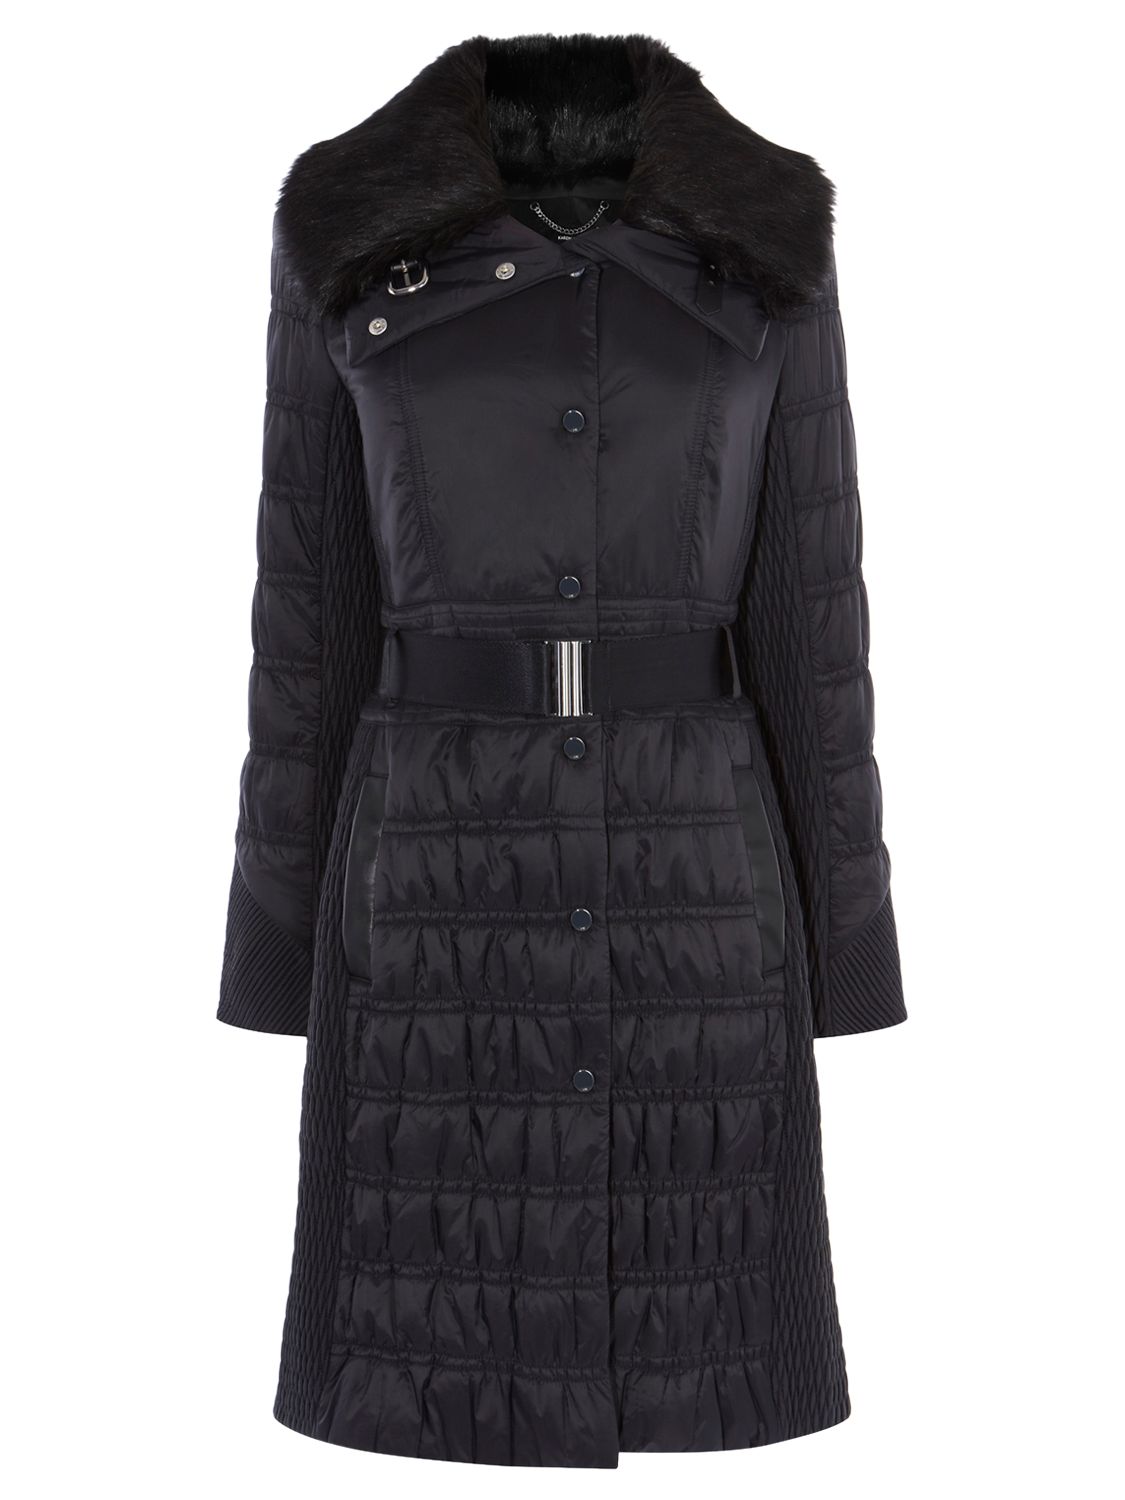 Karen Millen Lightweight Padded Coat, Black at John Lewis & Partners